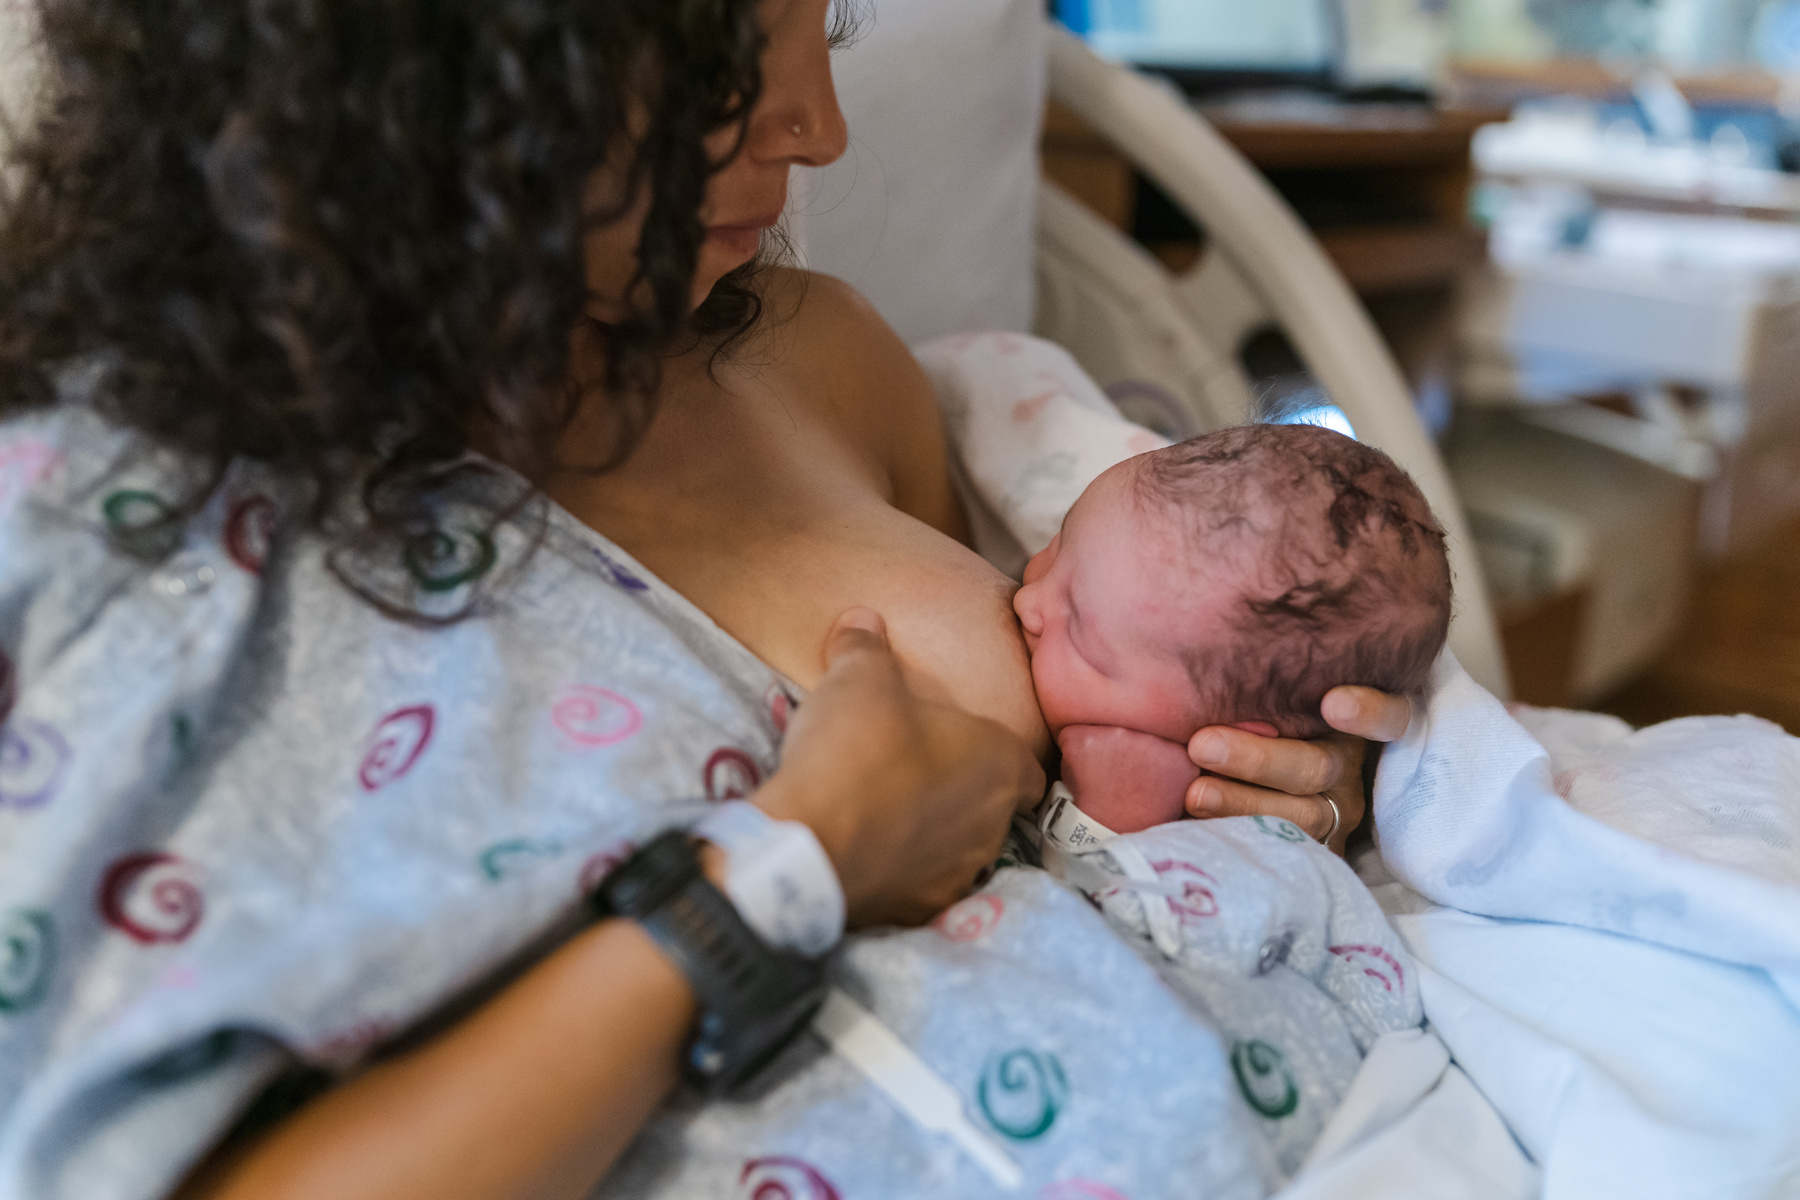 Newborn baby breastfeeding at the hospital